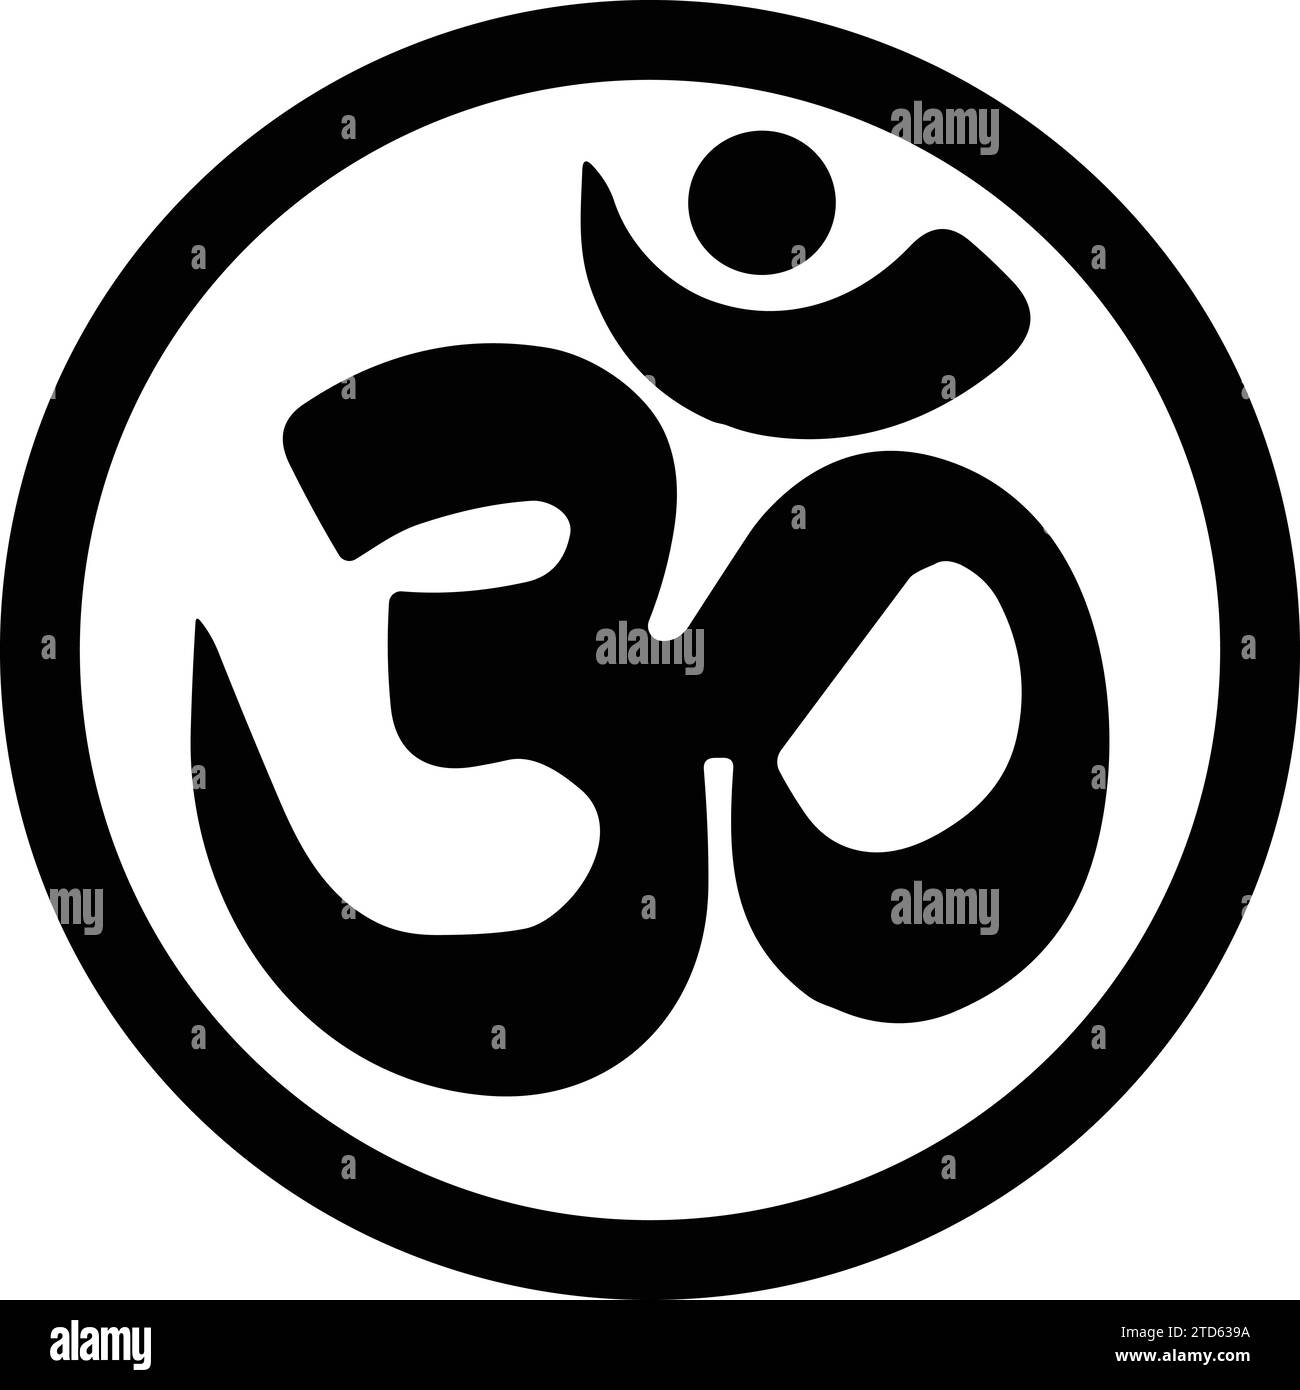 Hinduism sign | Hindu symbol | spiritual symbol | om symbol | Om icon,  Om sign, Hinduism religions mark Stock Vector